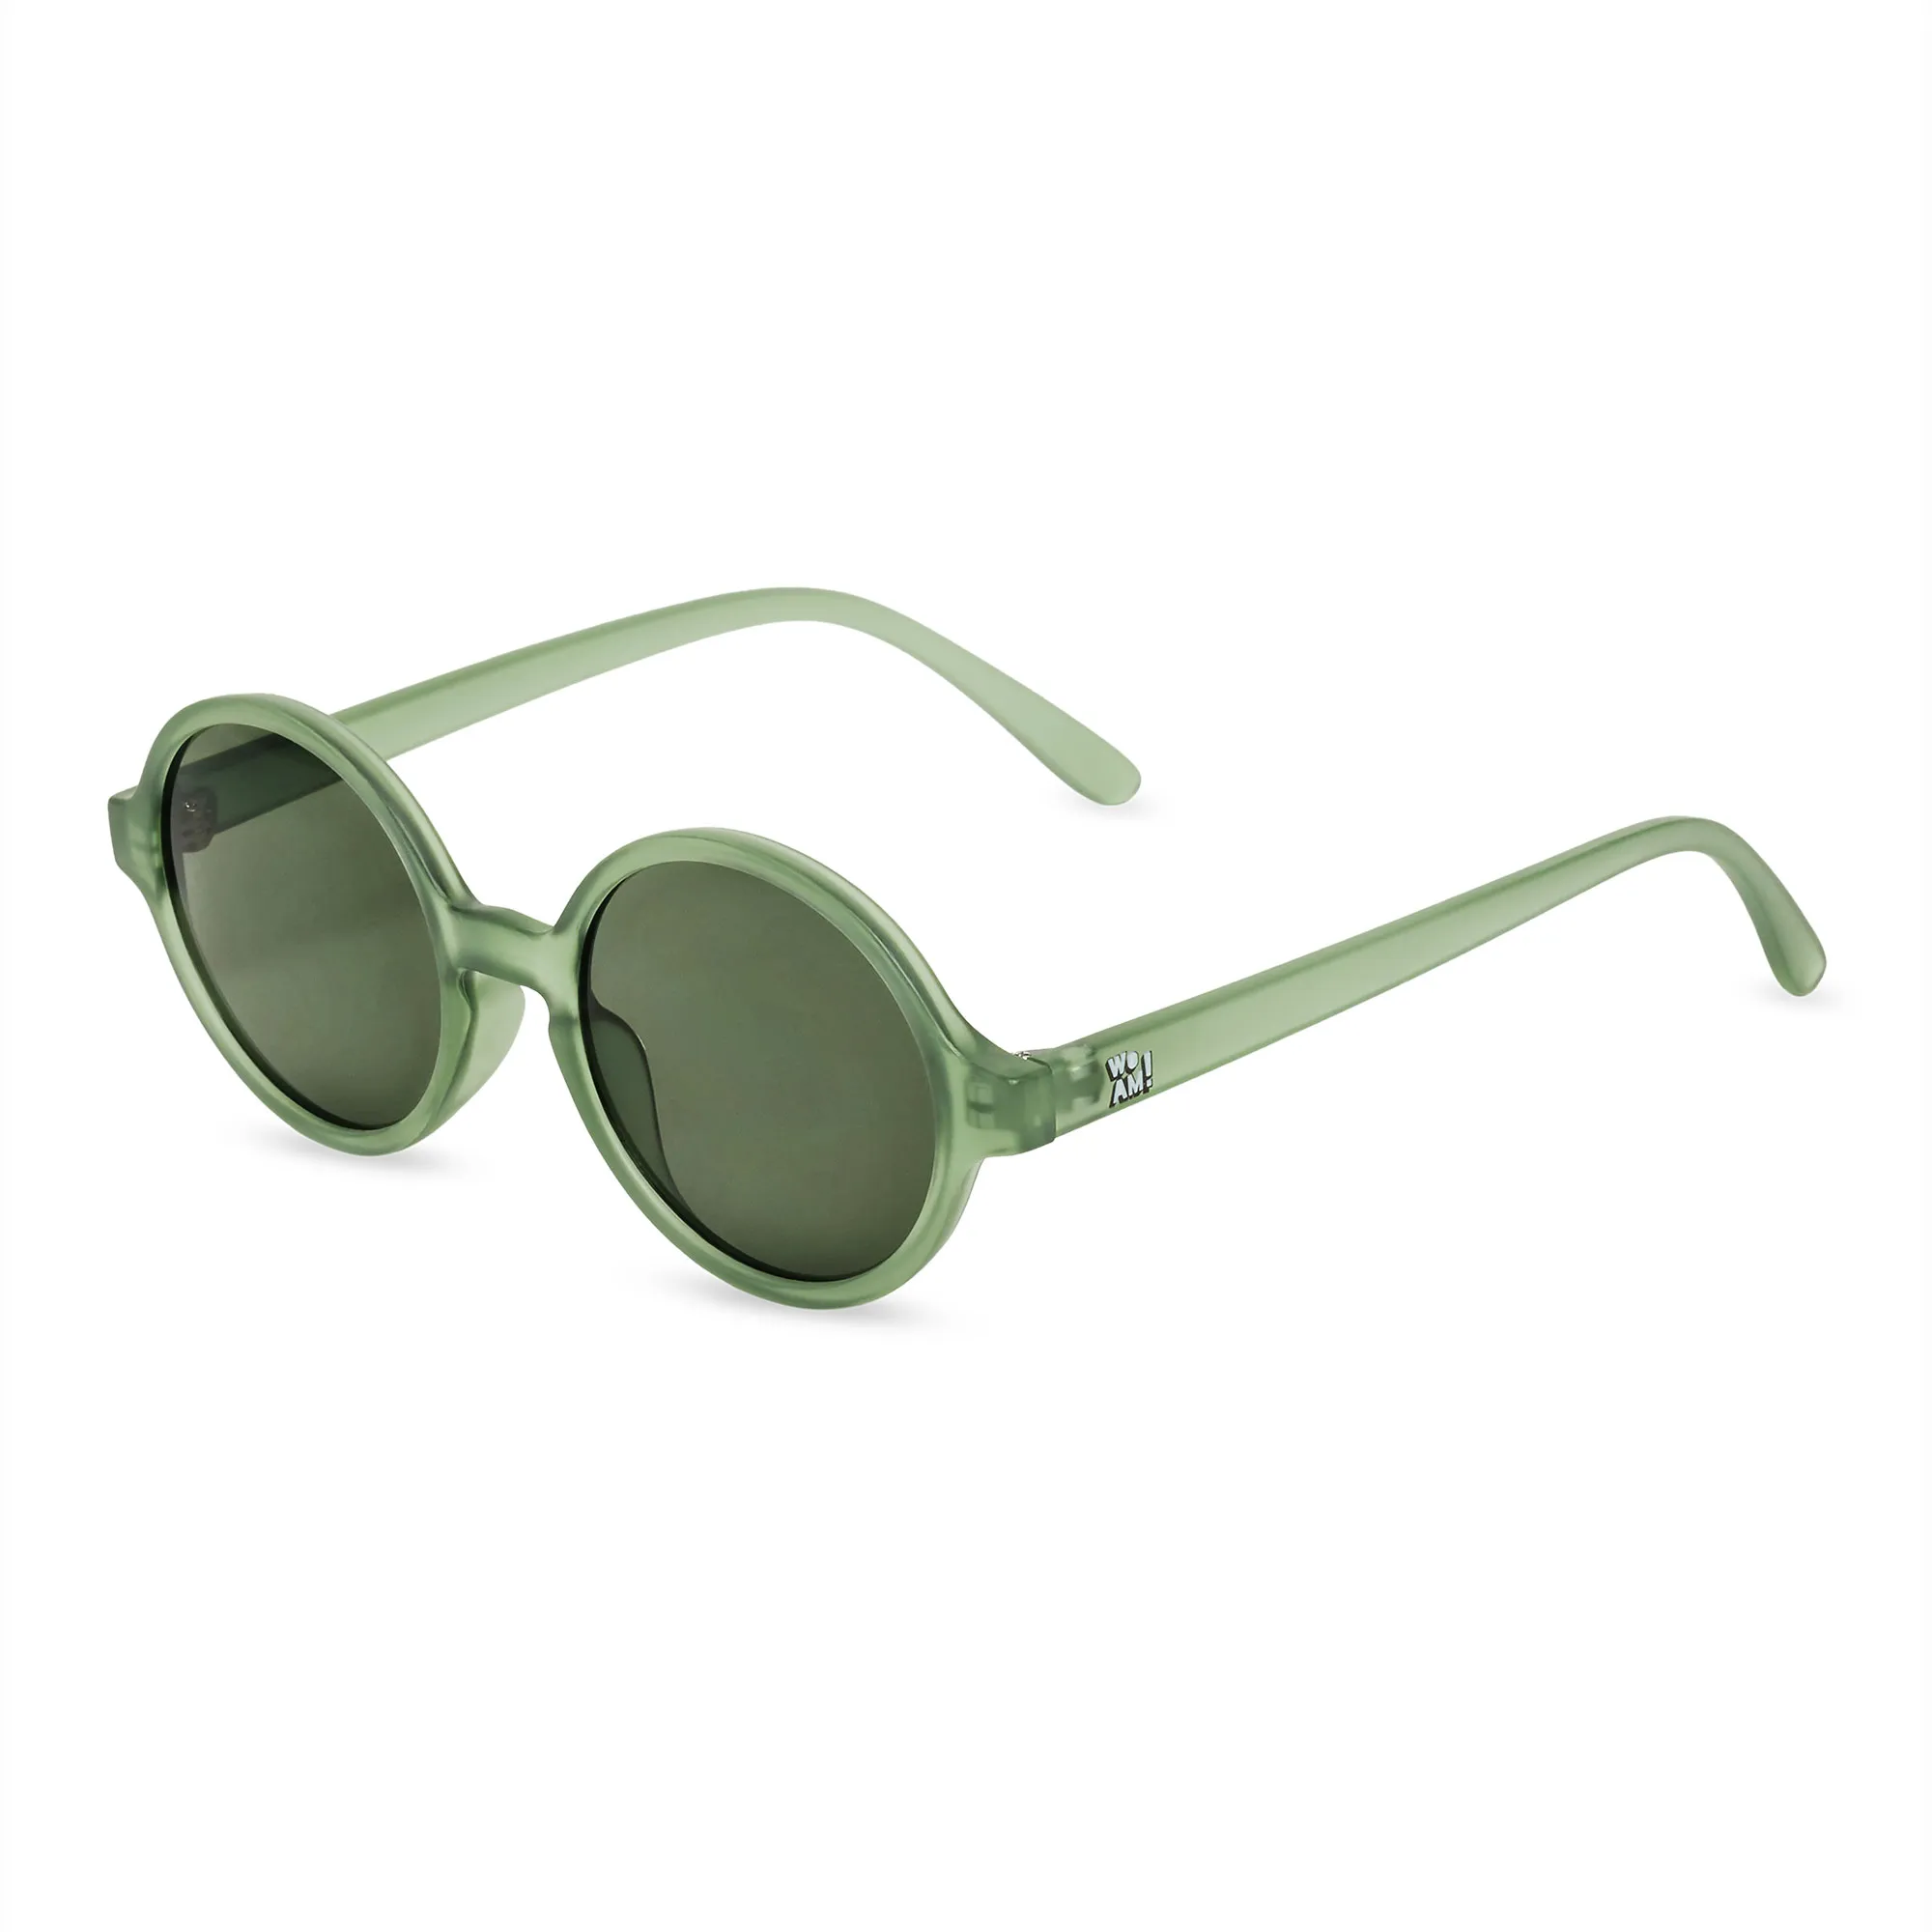 WOAM slnečné okuliare pre dospelých - Bottle Green 1×1 ks, slnečné okuliare